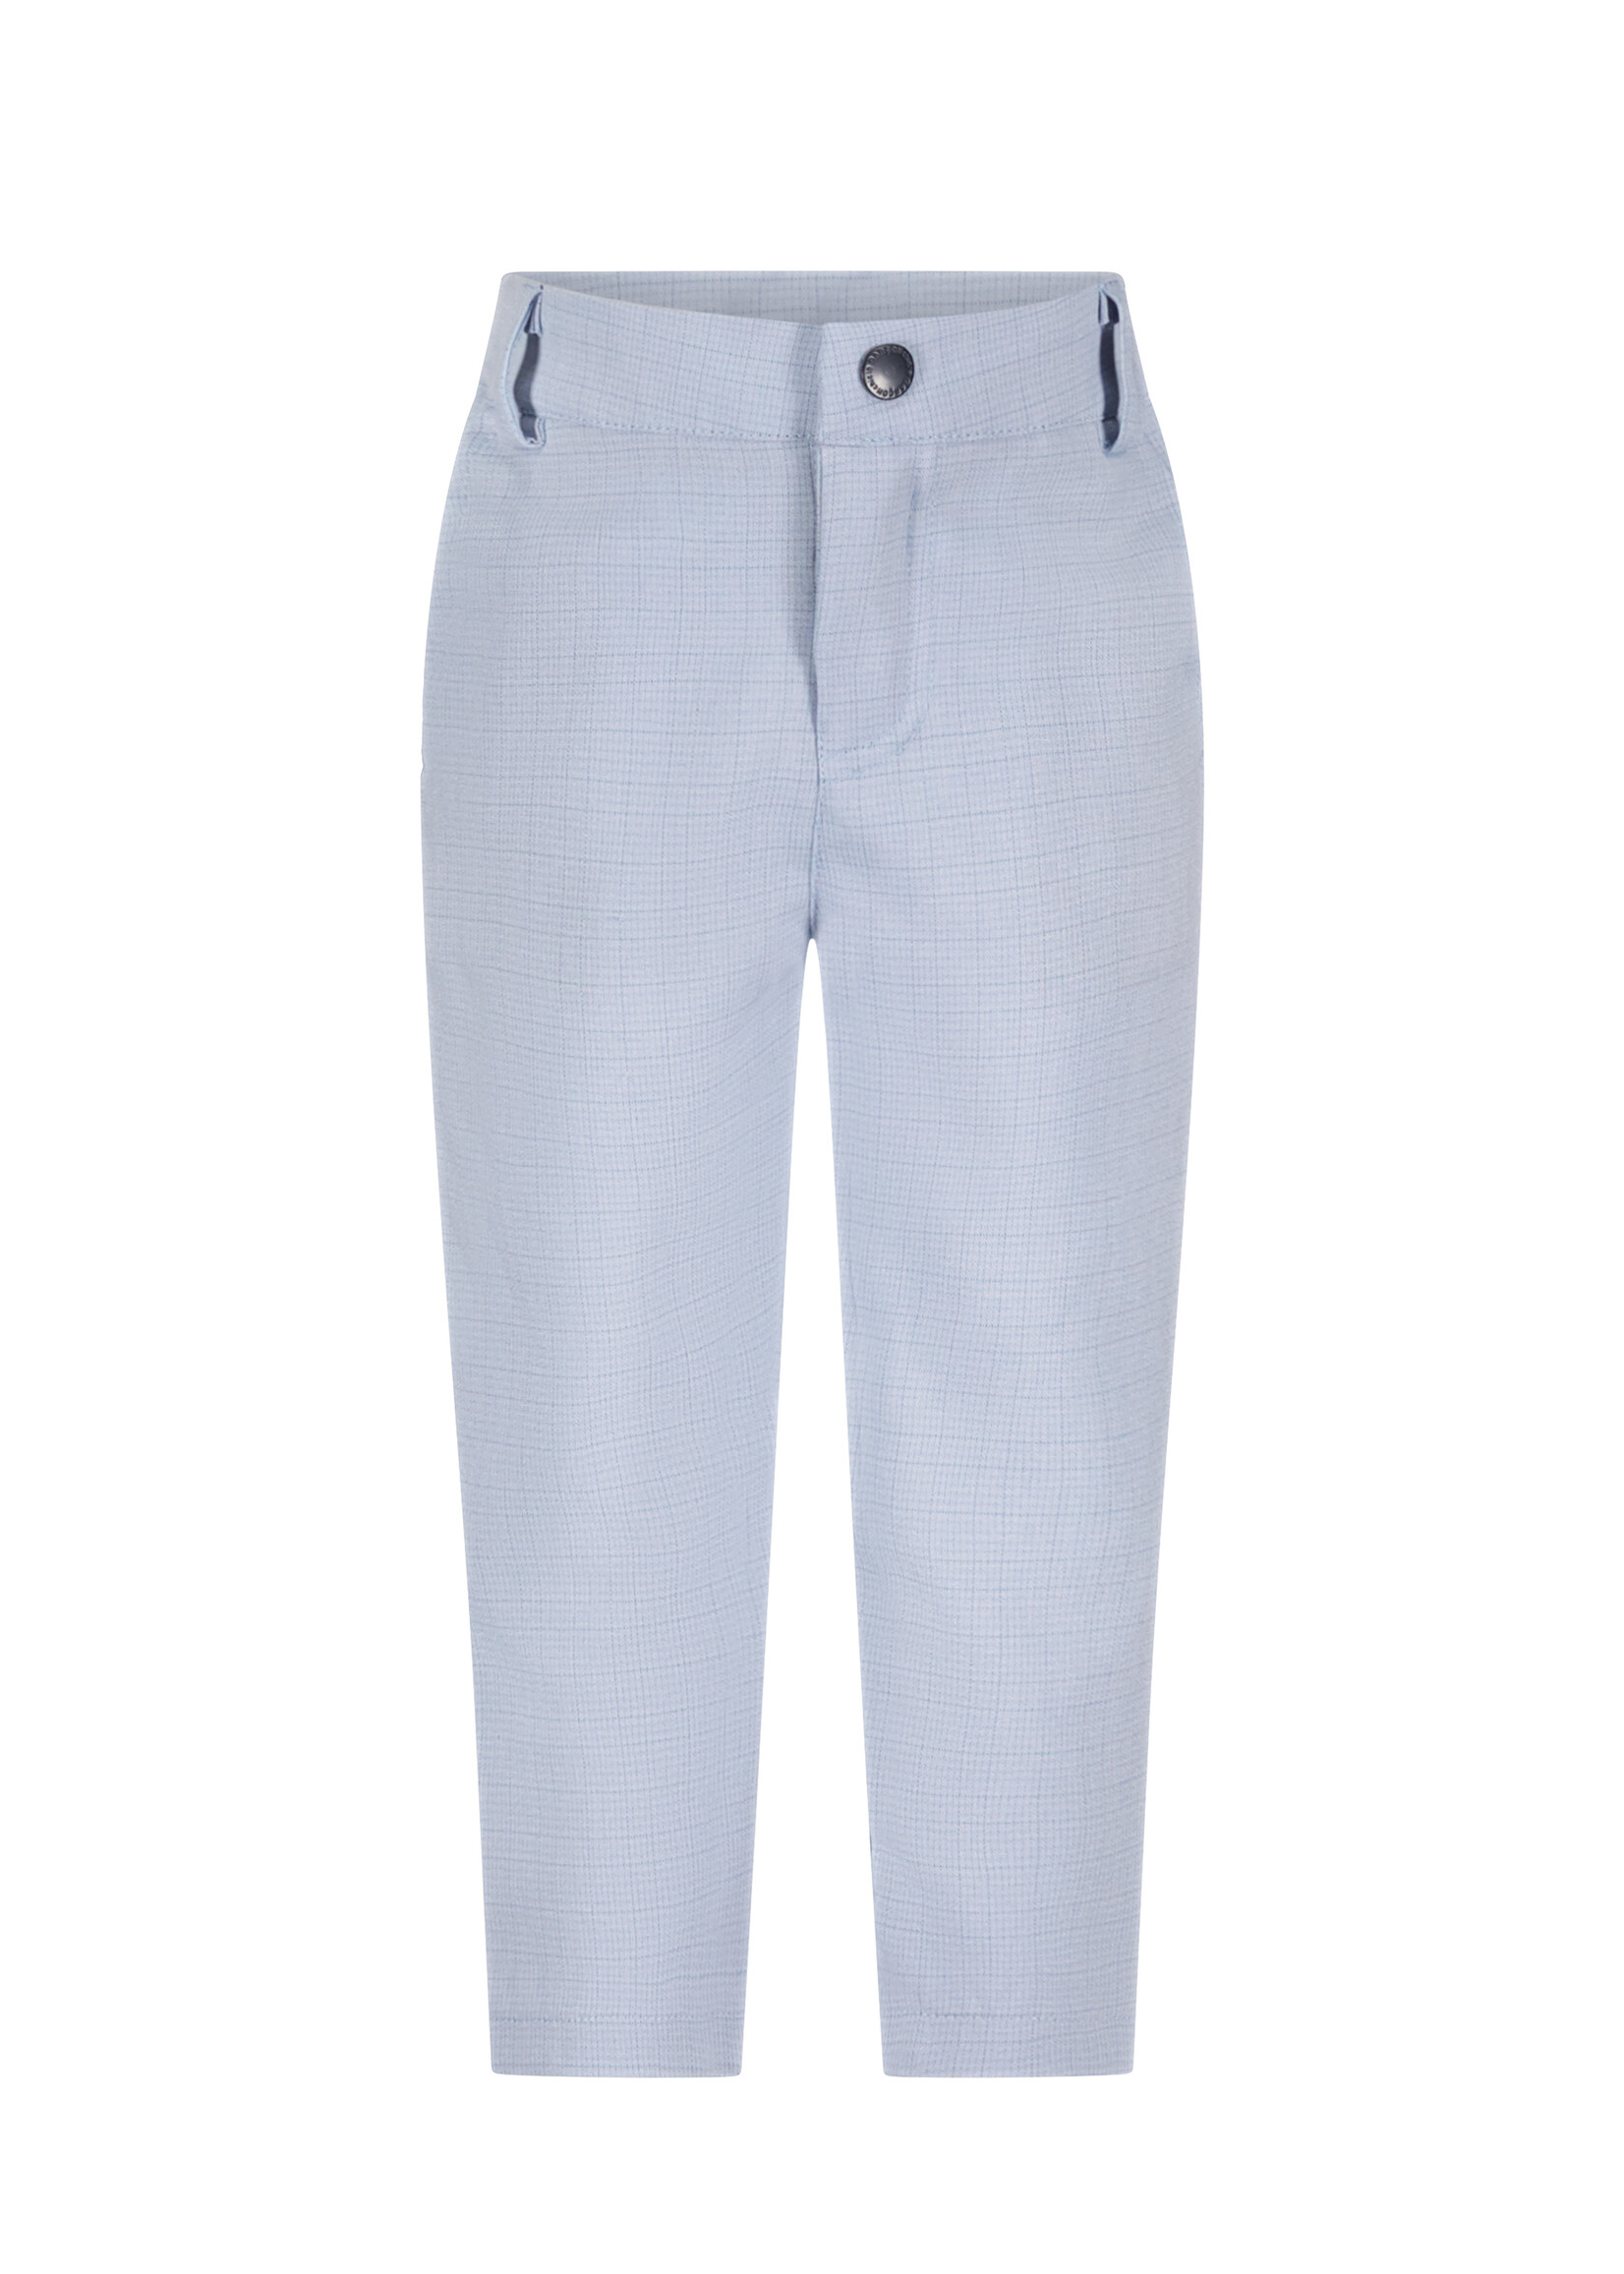 Le Chic Boys Baby L312-8606 DAVEY suit pants Greyish Blue